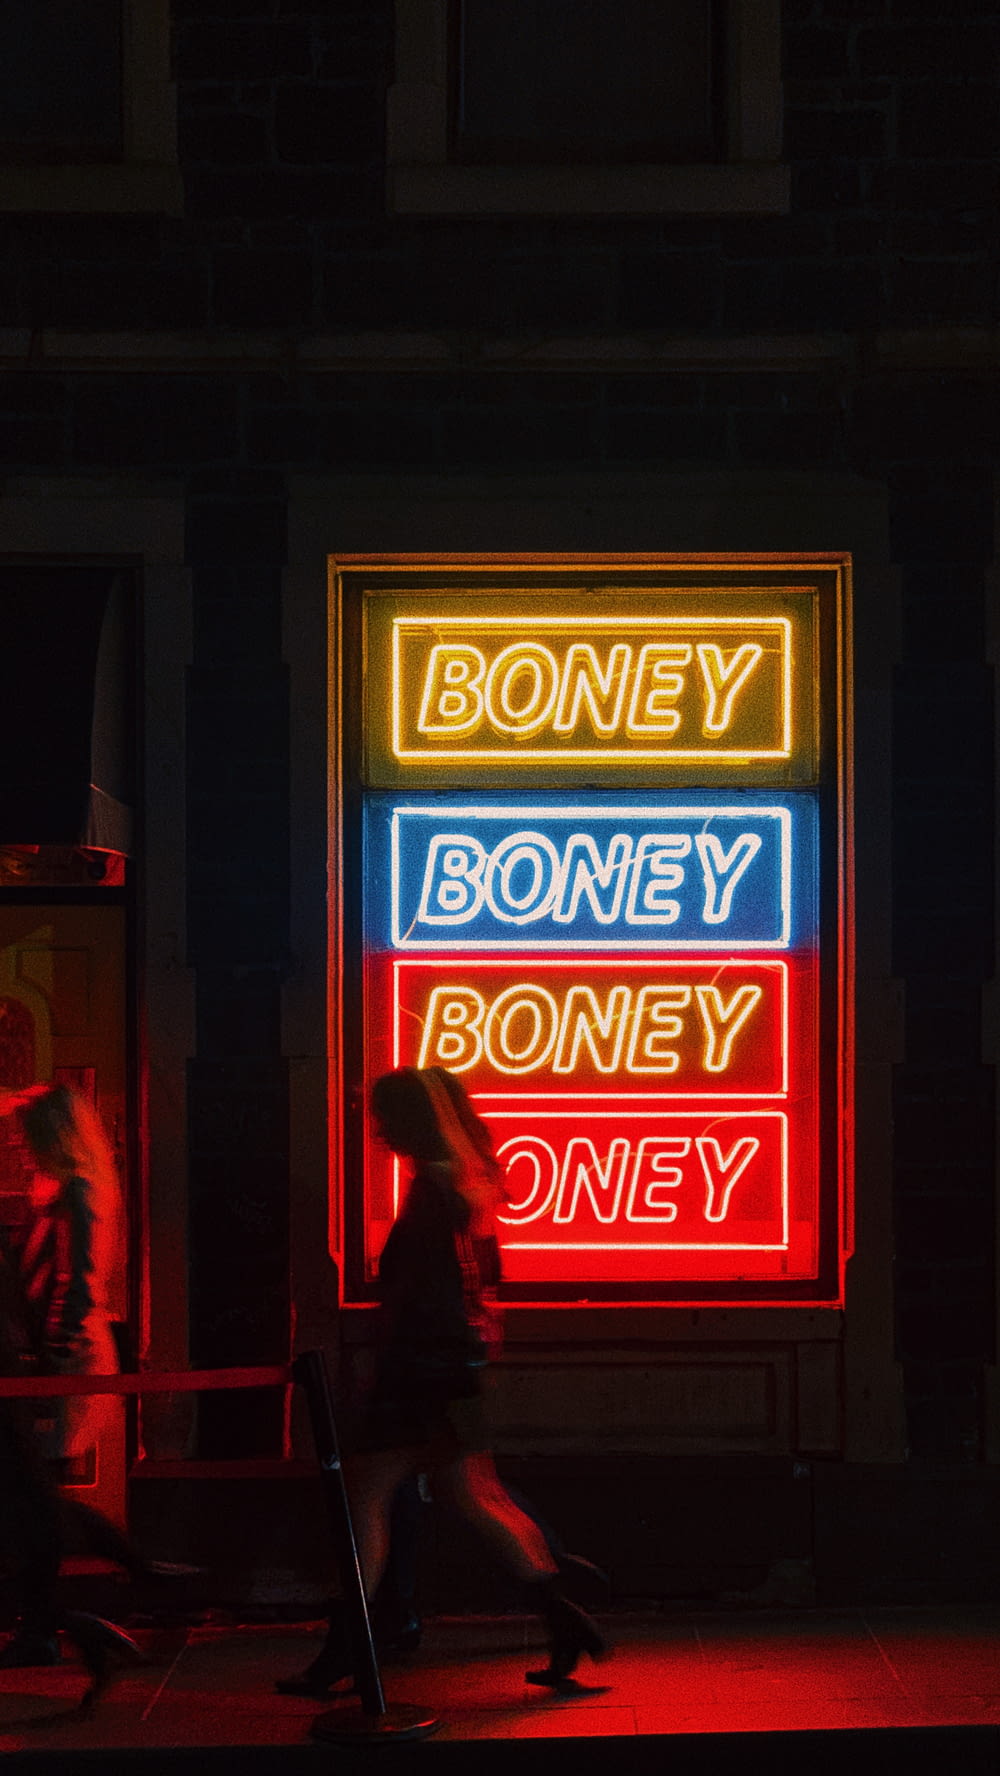 a neon sign that says honey, boney, boney, and oney